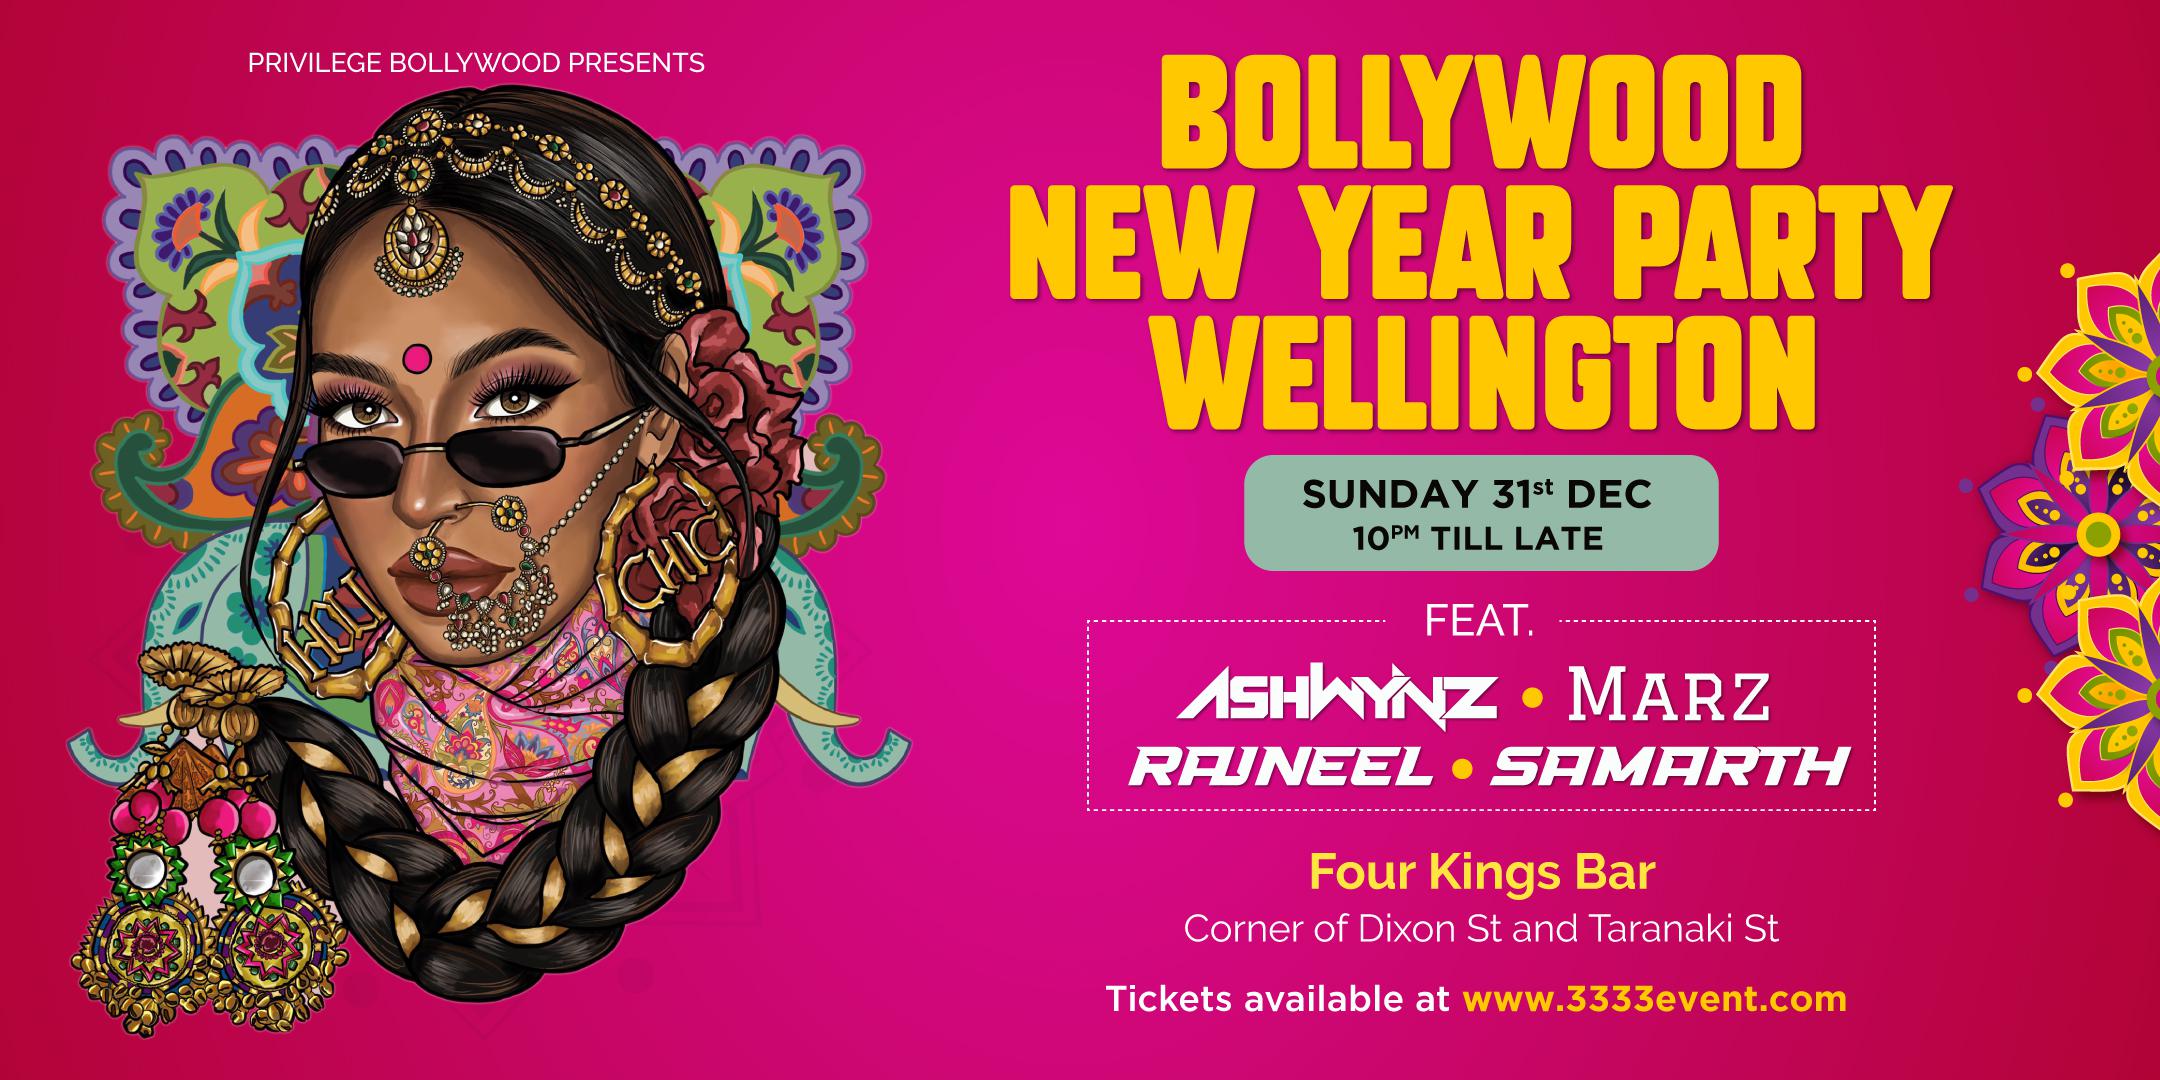 Bollywood New Year Party: Wellington